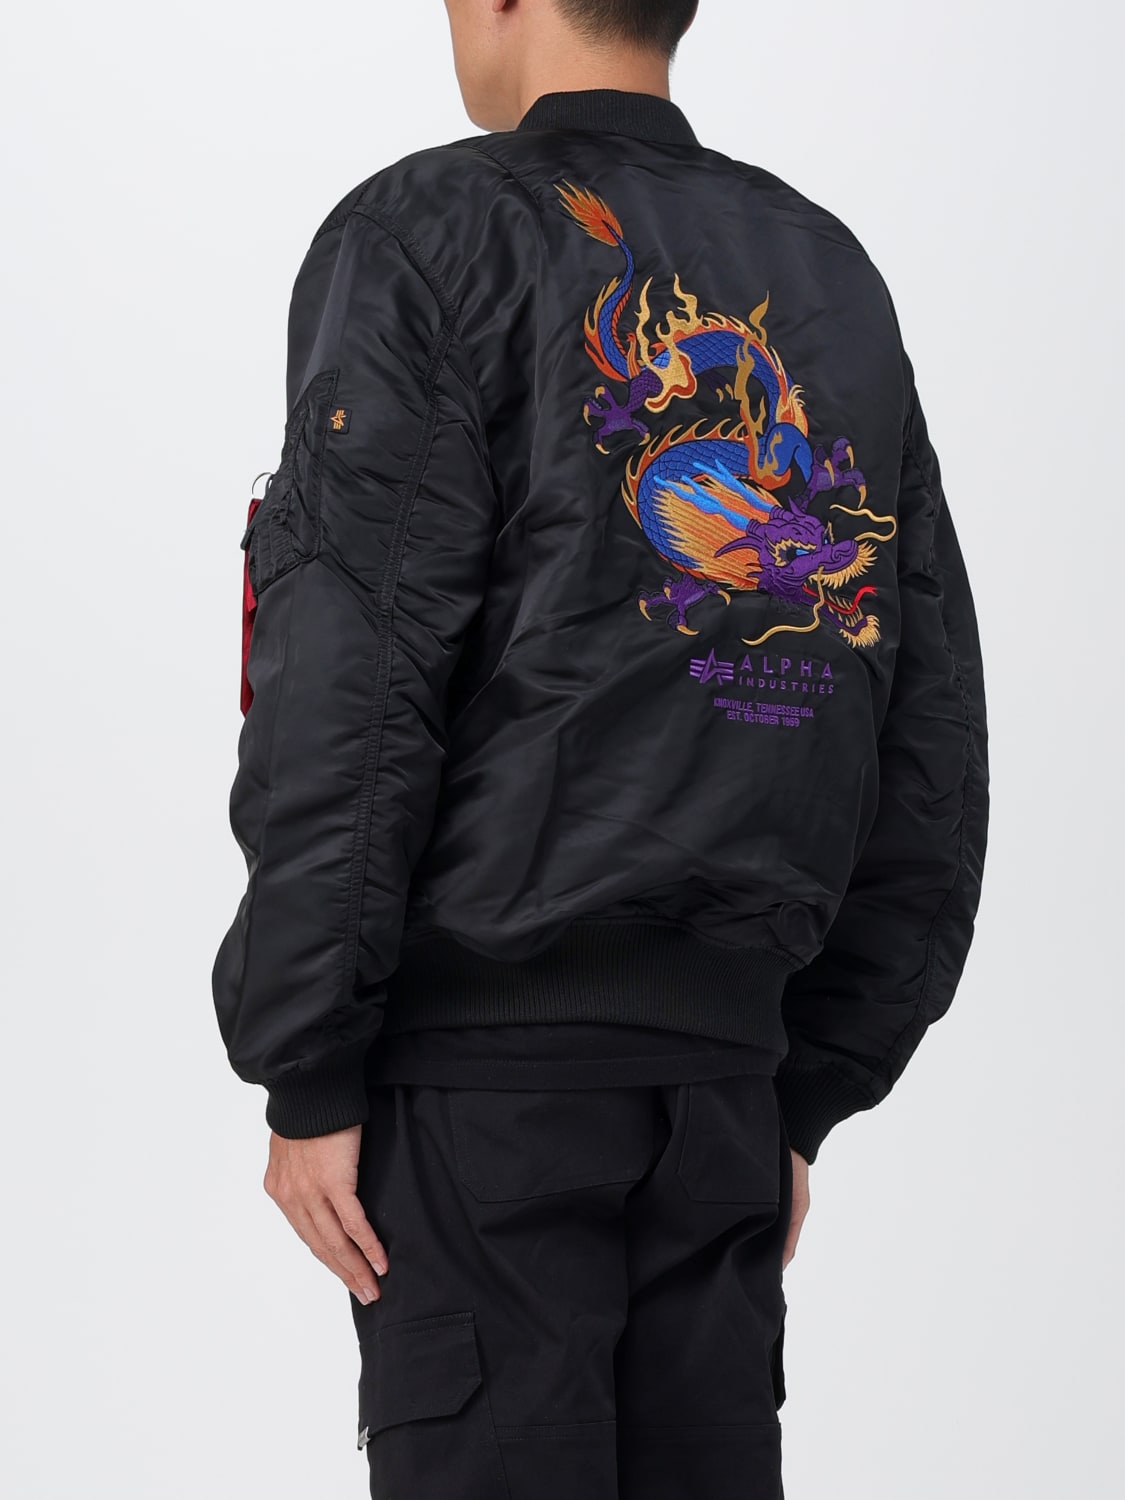 jacket jacket at INDUSTRIES: ALPHA man online for Alpha - 138103 | Black Industries